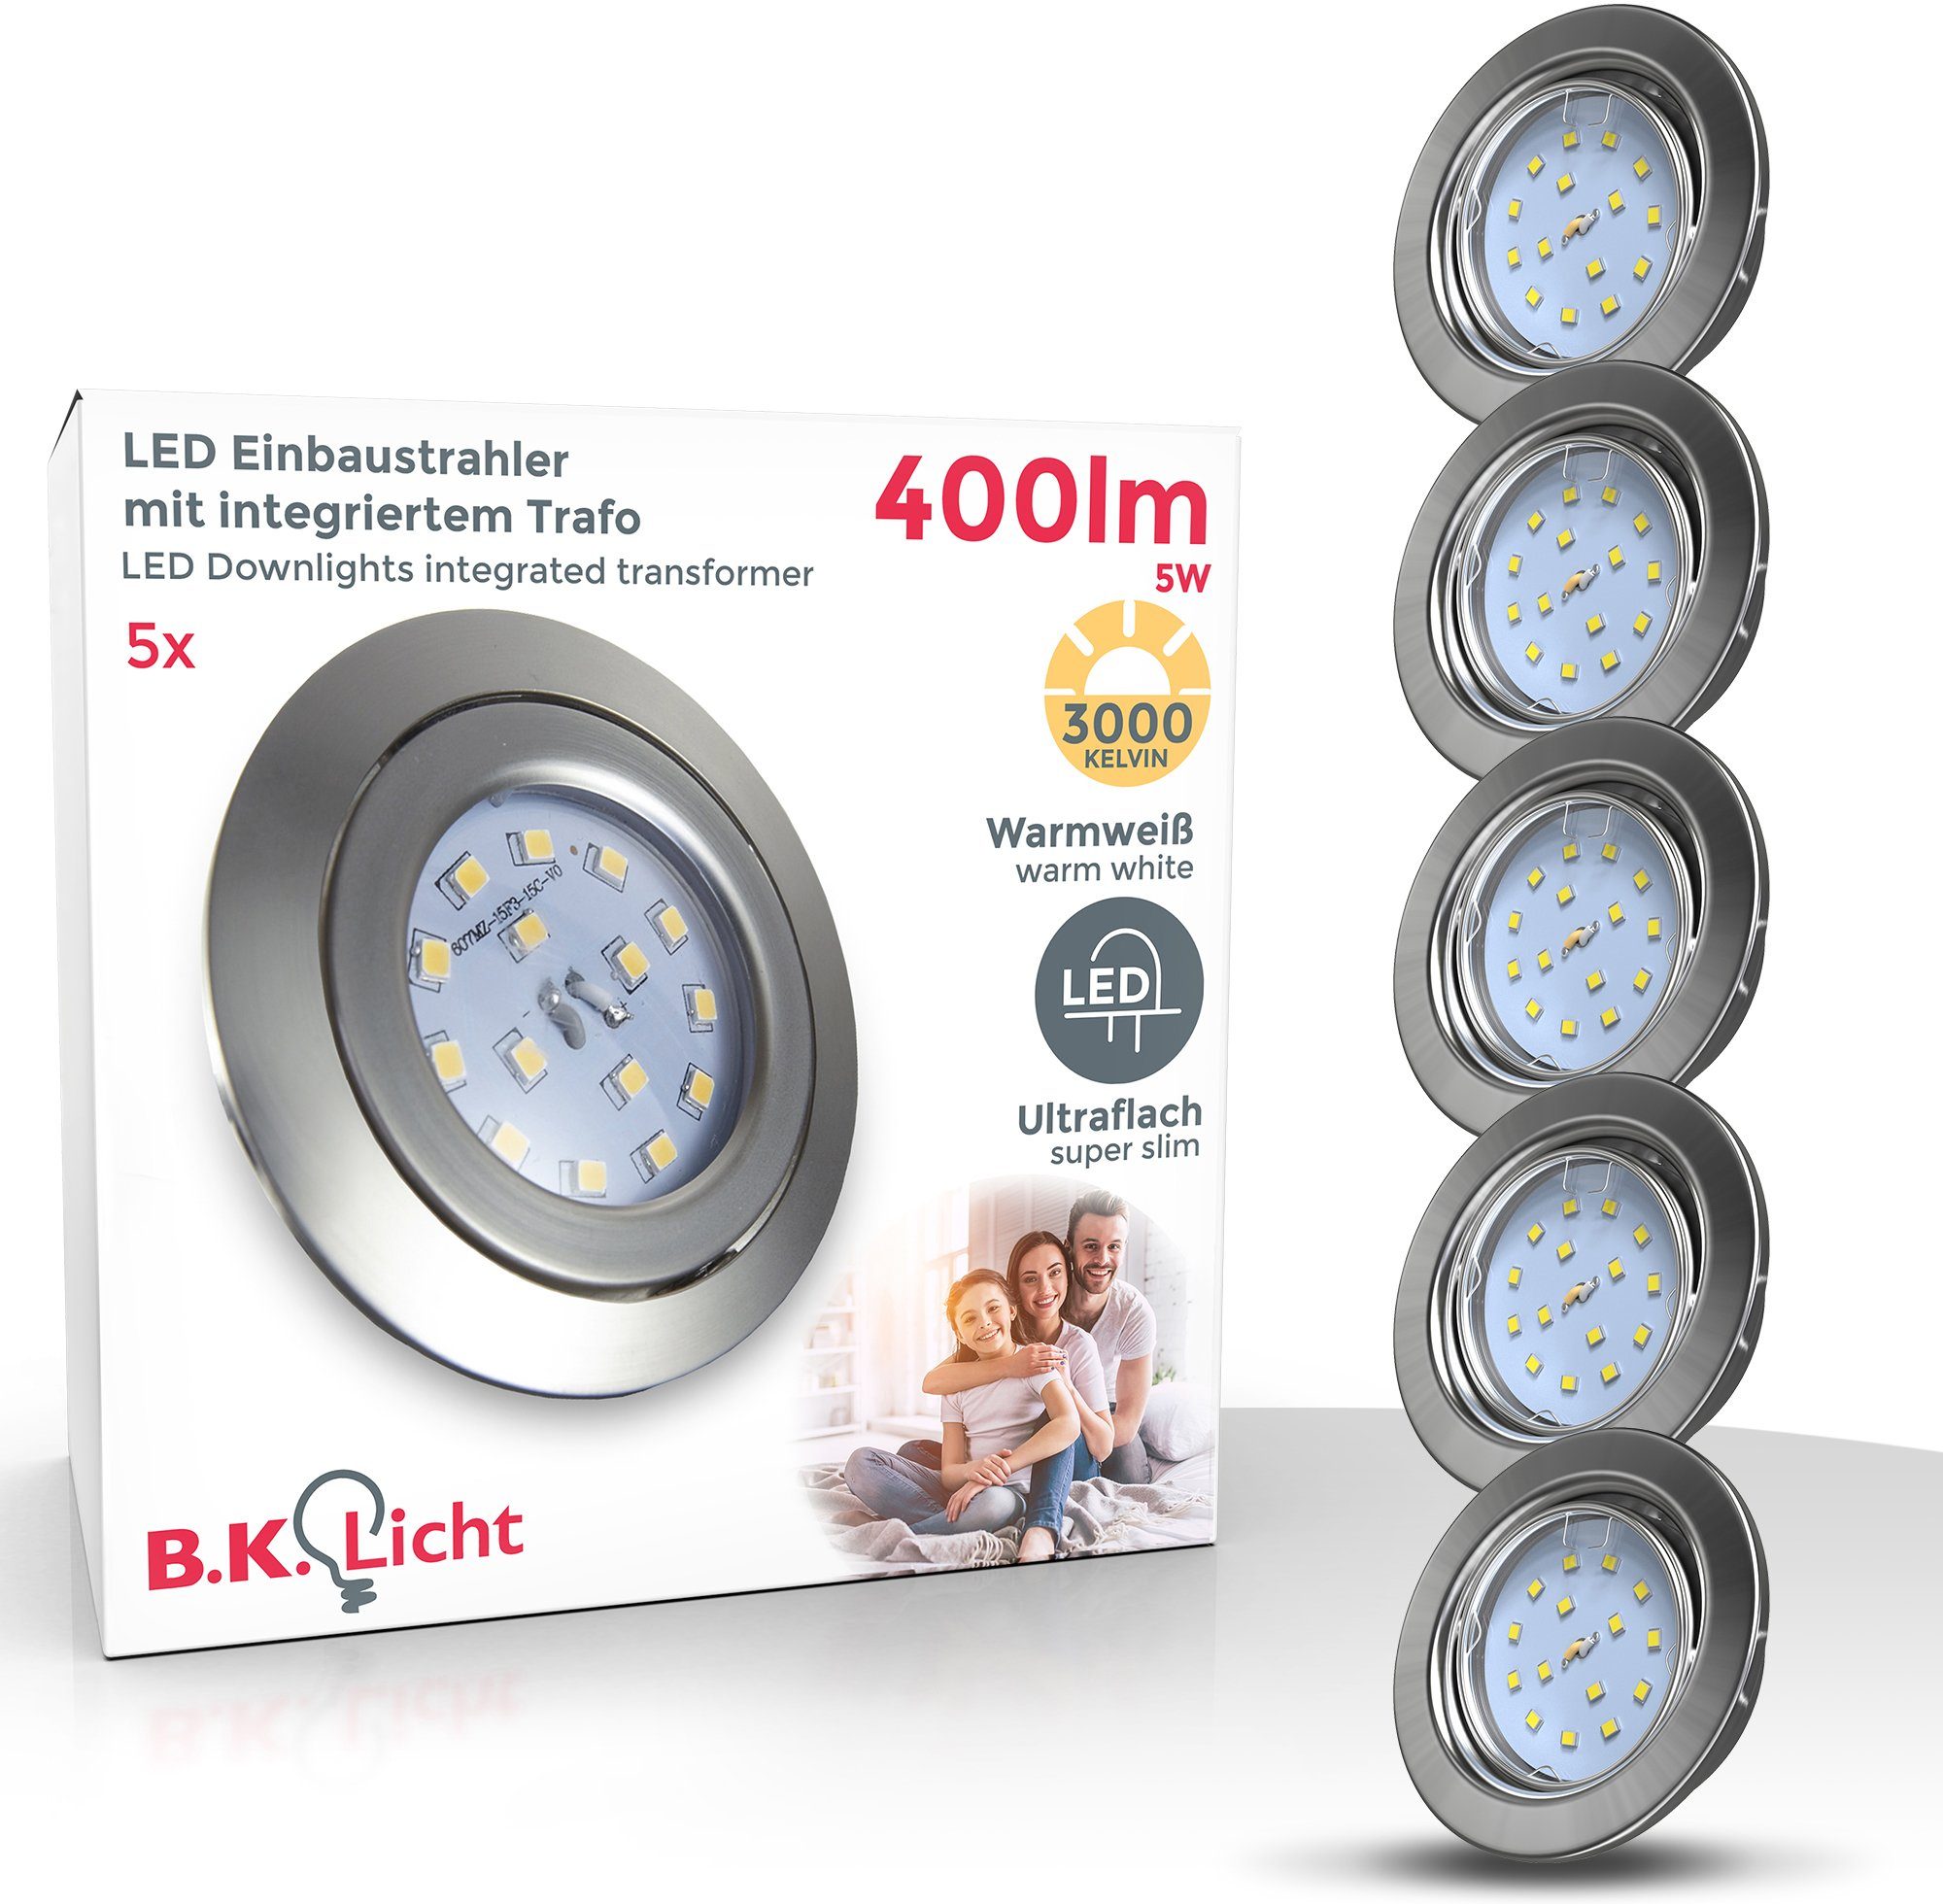 LED fest inkl. B.K.Licht 5W ultra Einbauspots, 400LM flach, Warmweiß, 3000K, schwenkbar Einbauleuchte, integriert, LED LED 5x